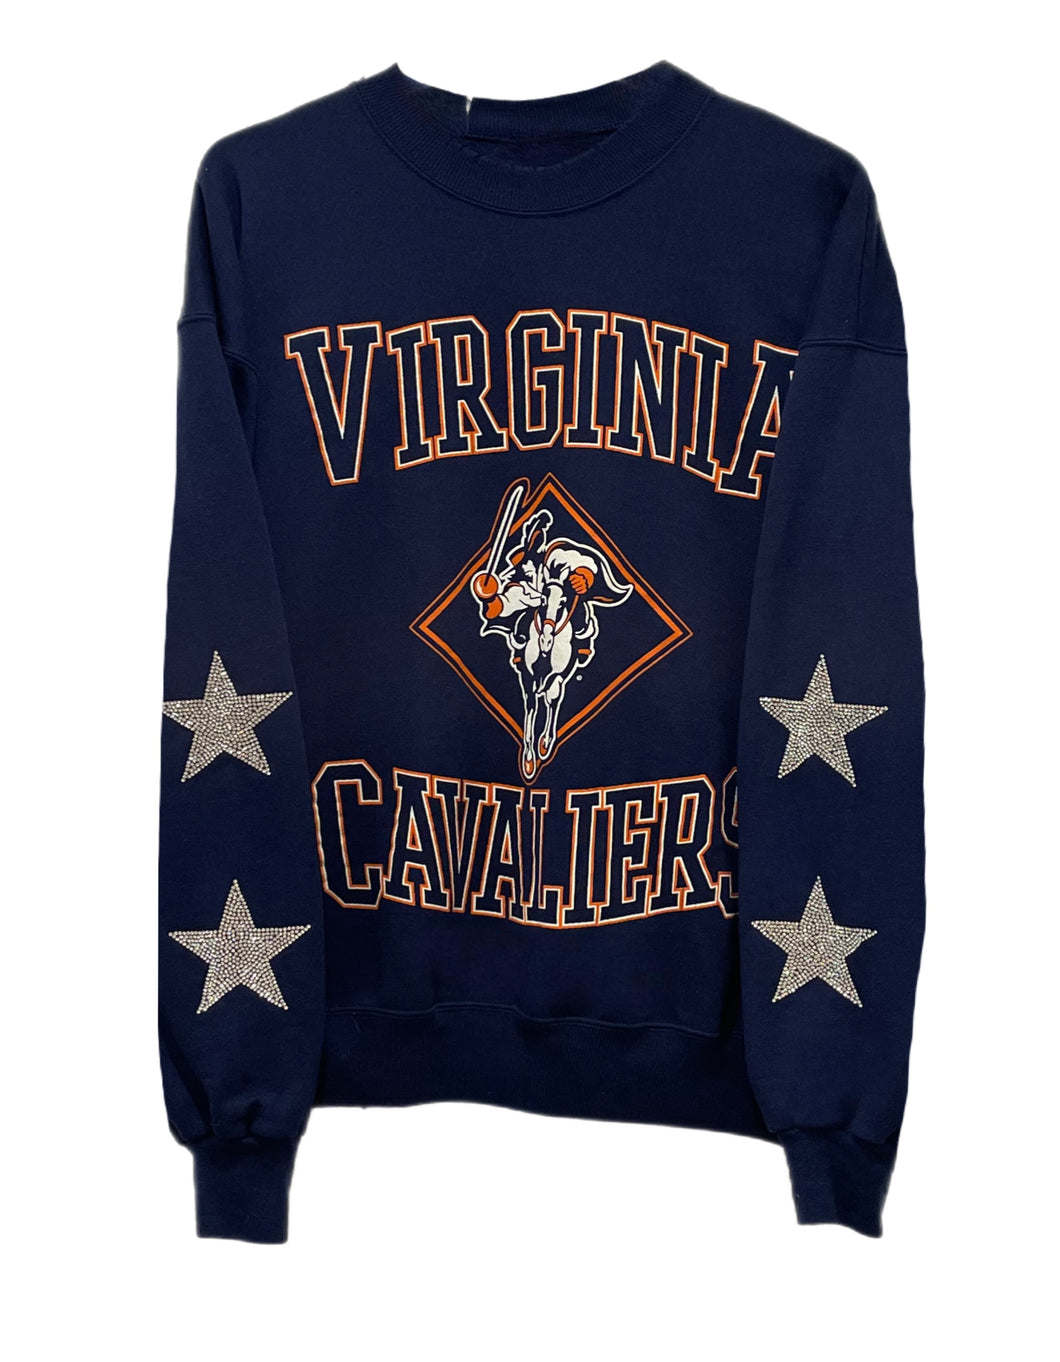 University of Virginia, UVA One of a KIND “Rare Find” Vintage Sweatshirt with Crystal Star Design